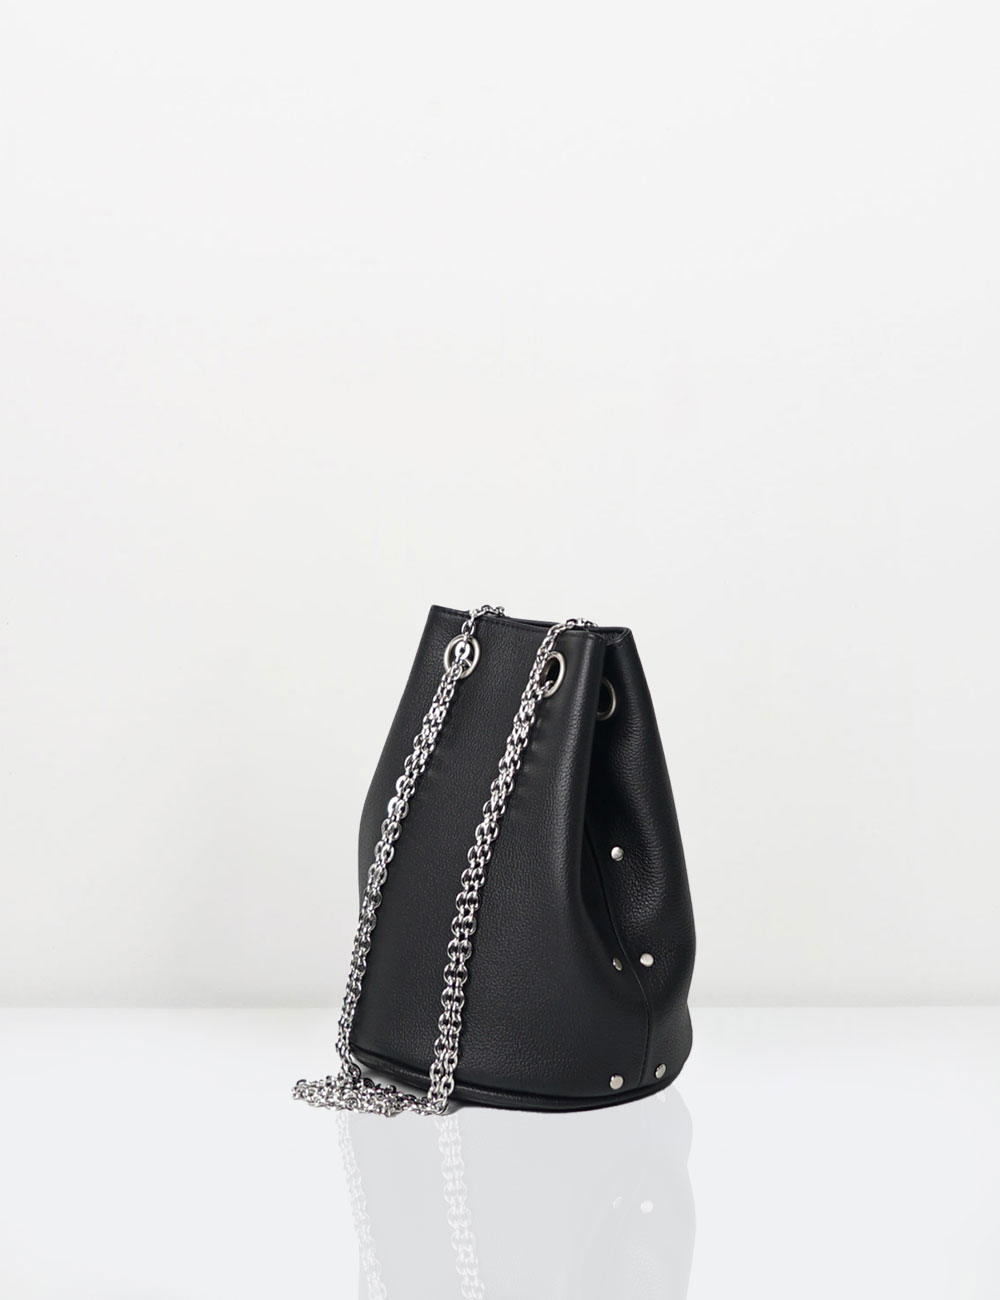 12mini chain bag / black